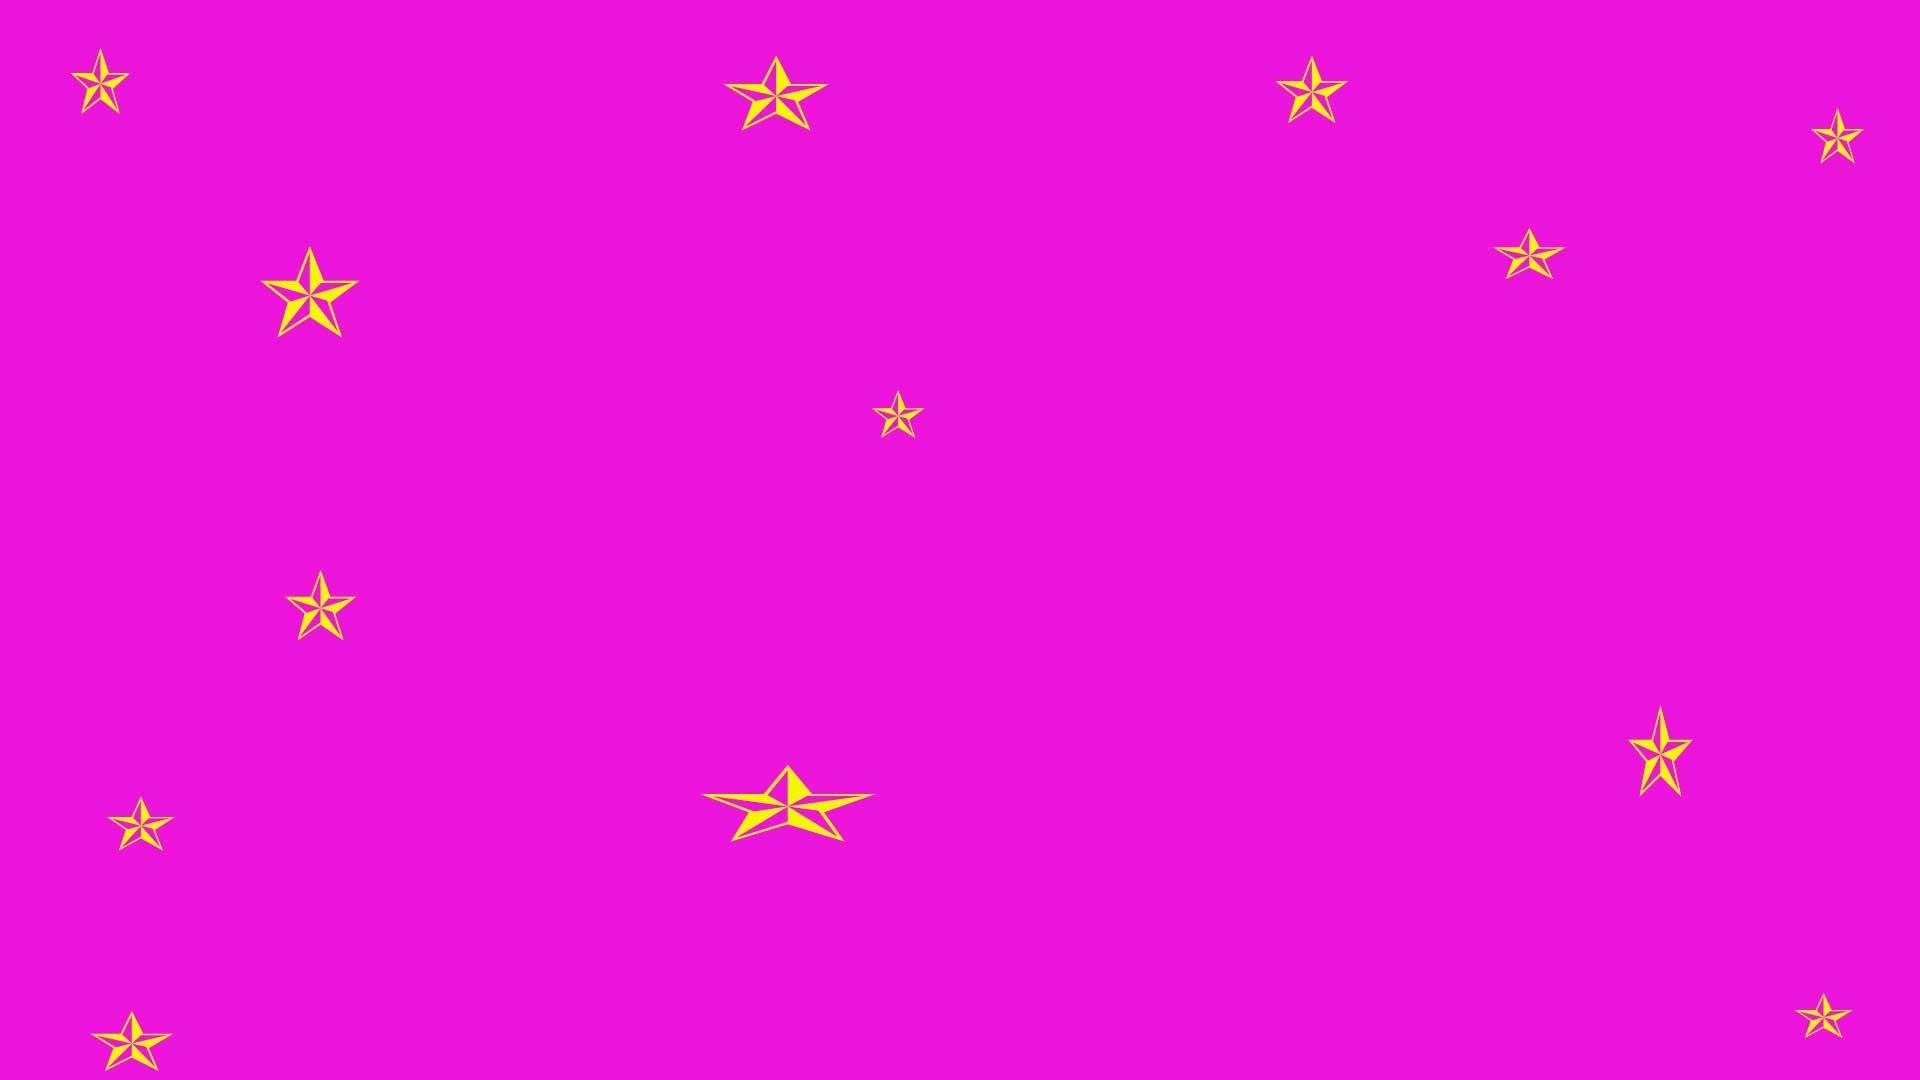 1920x1080  Bright Pink Background, Gold Stars - Free Image